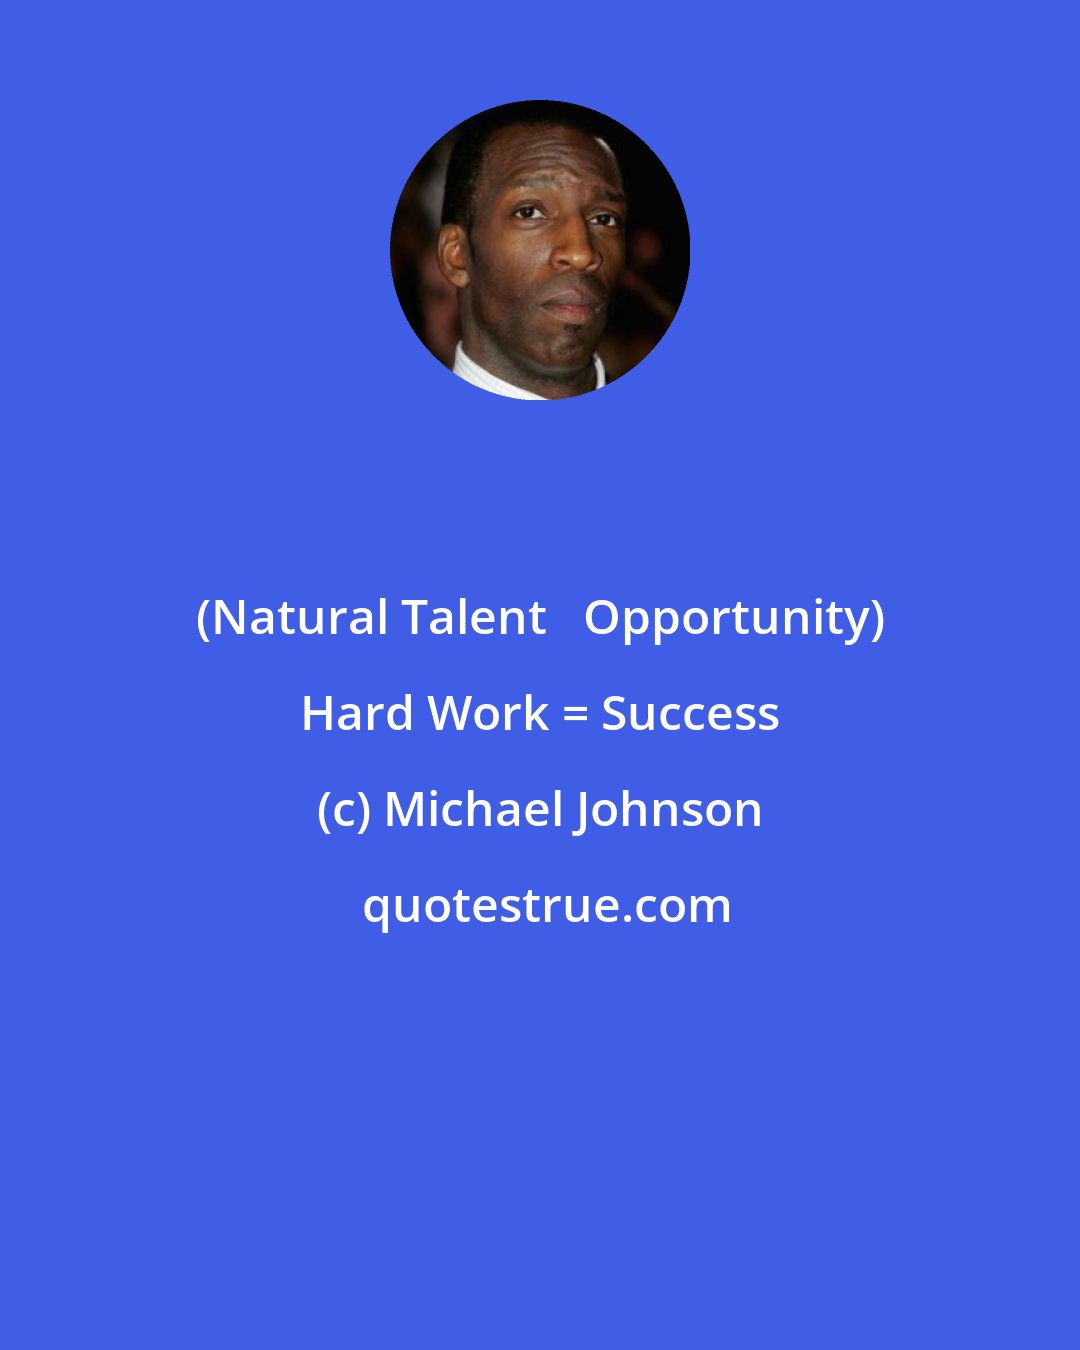 Michael Johnson: (Natural Talent + Opportunity) Hard Work = Success